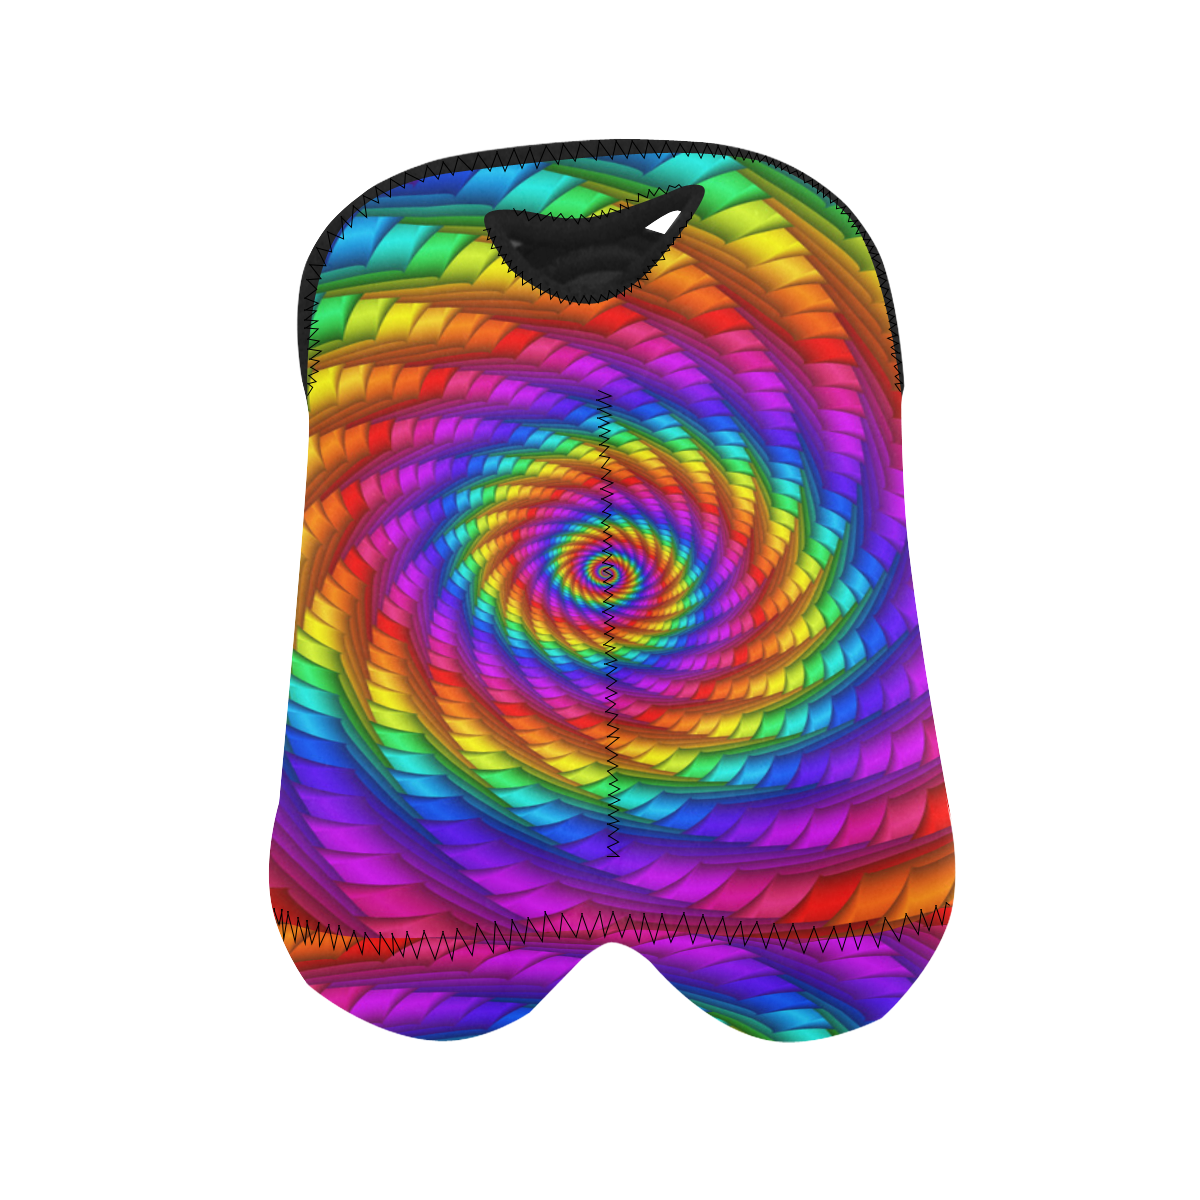 Psychedelic Rainbow Spiral Wine Bag 2-Bottle Neoprene Wine Bag